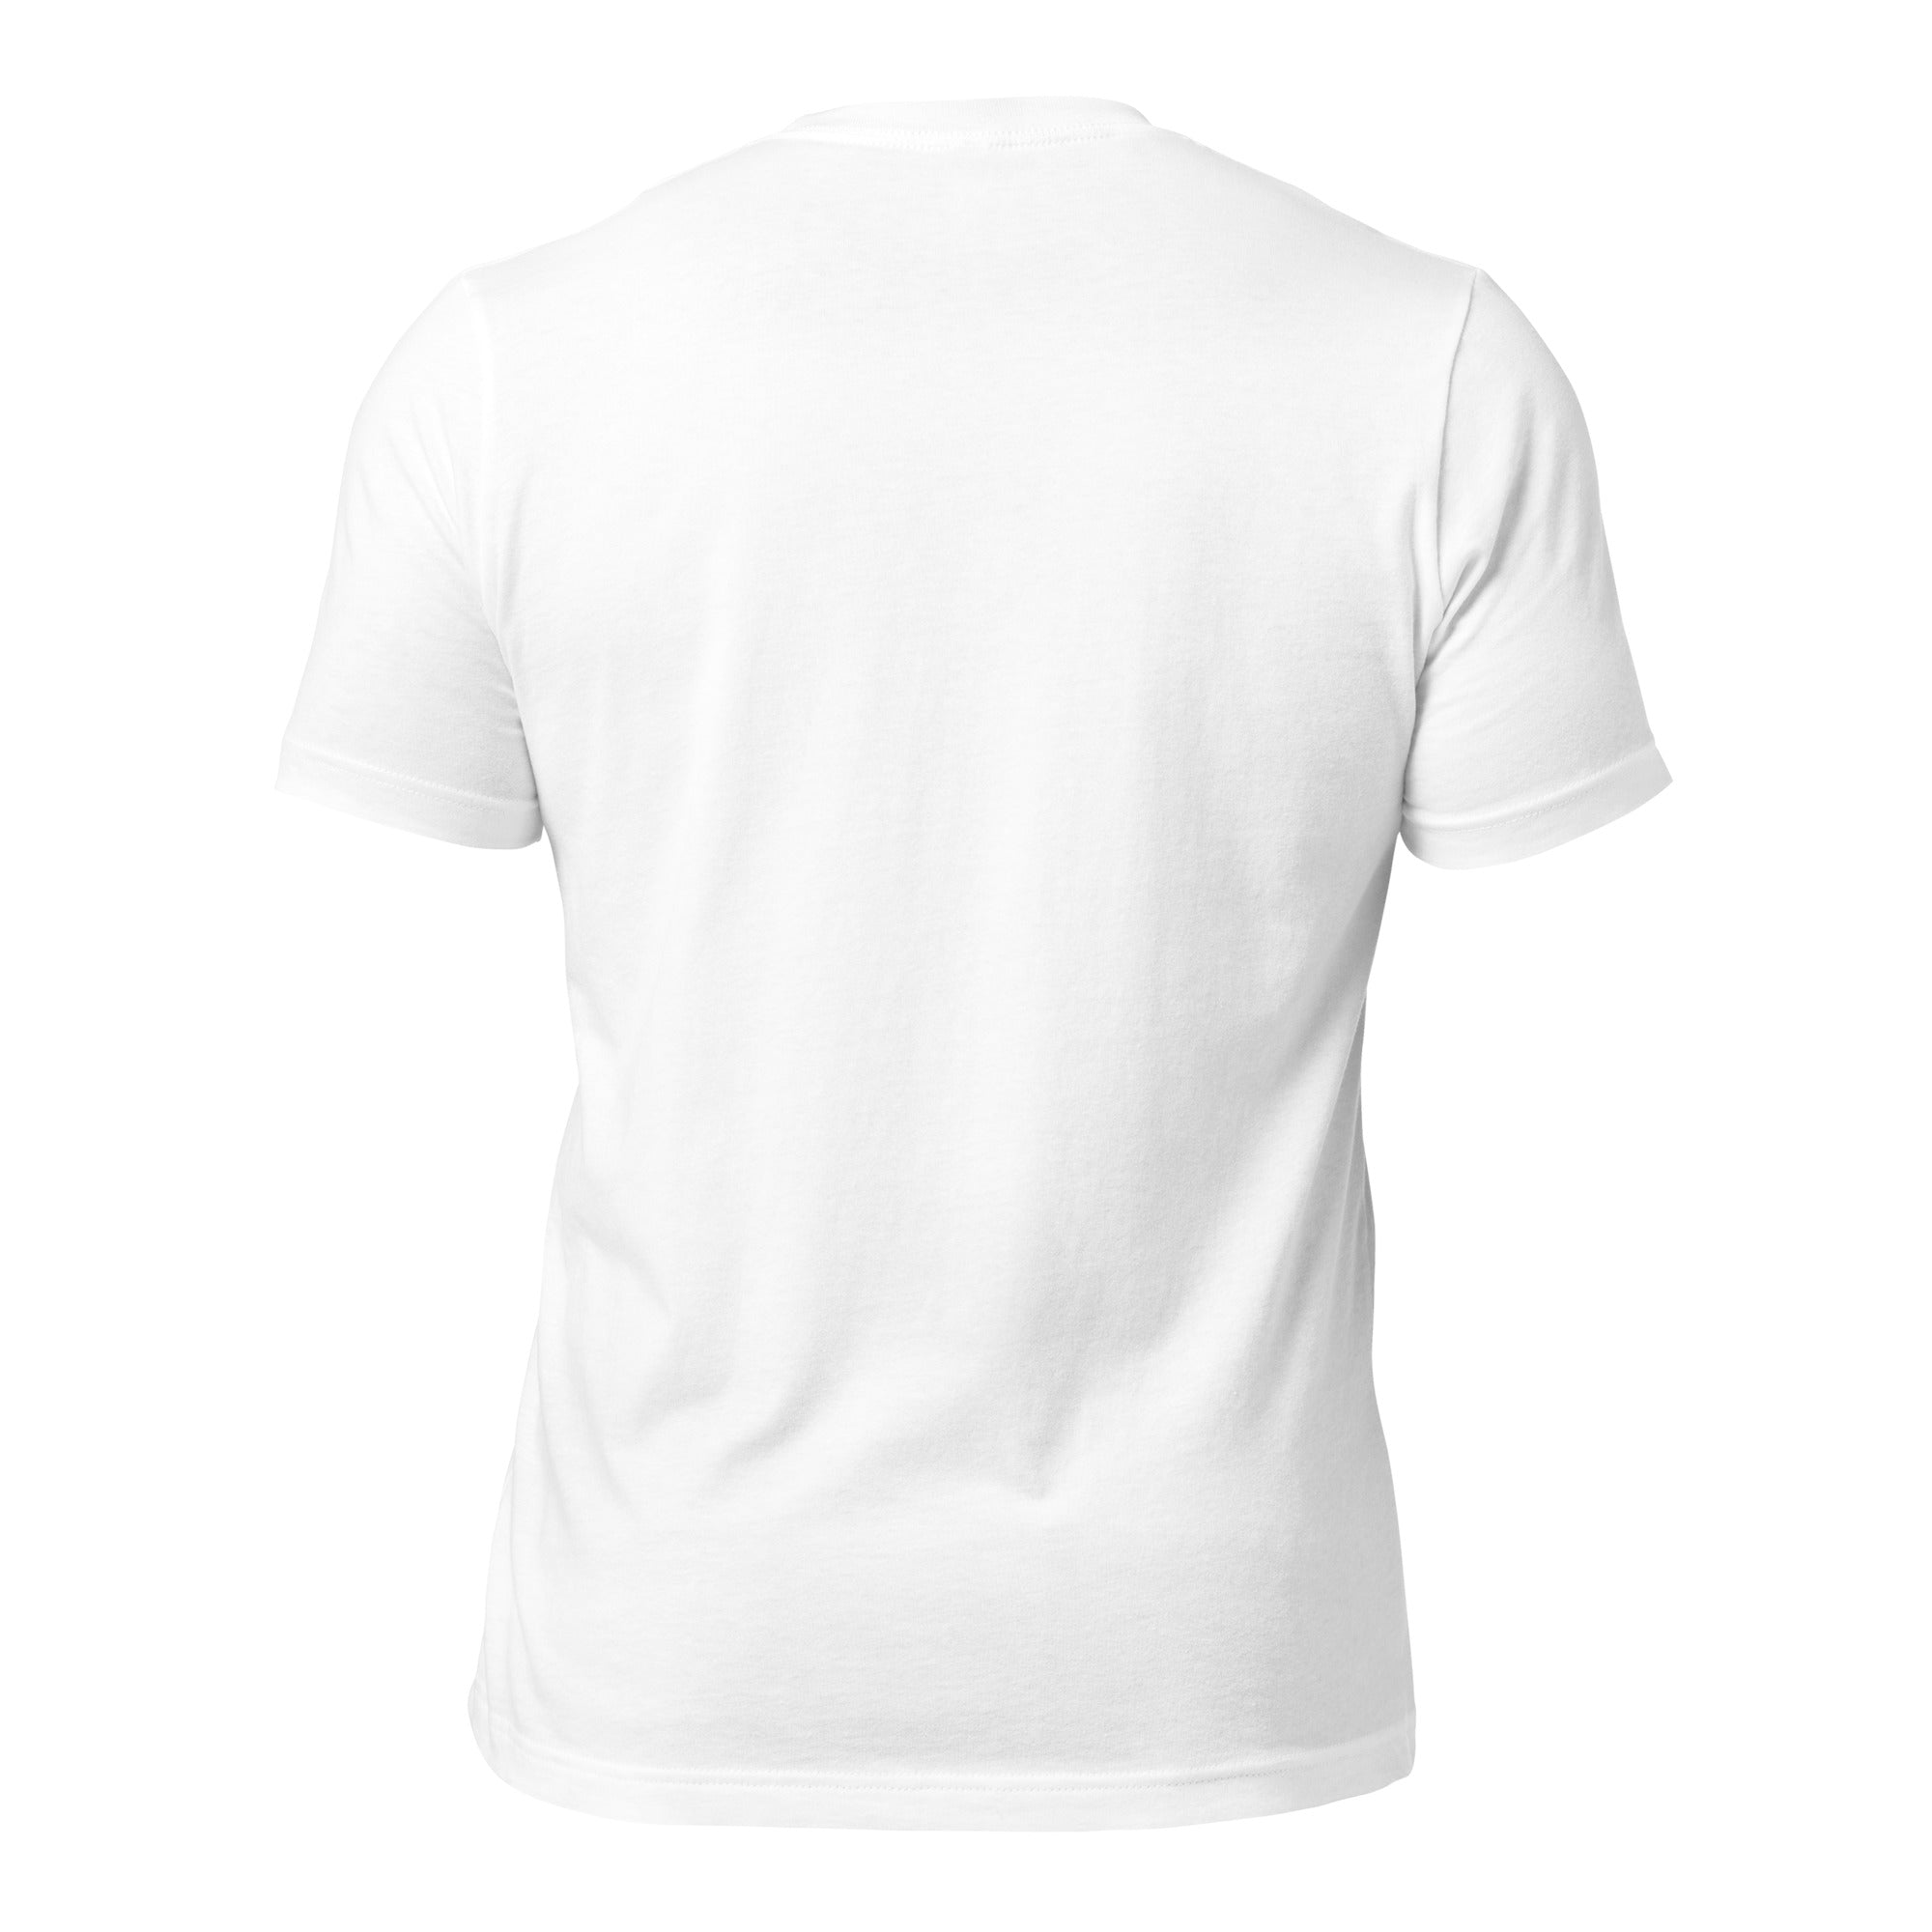 Labradoodle - Short Sleeve Cotton Tee Shirt